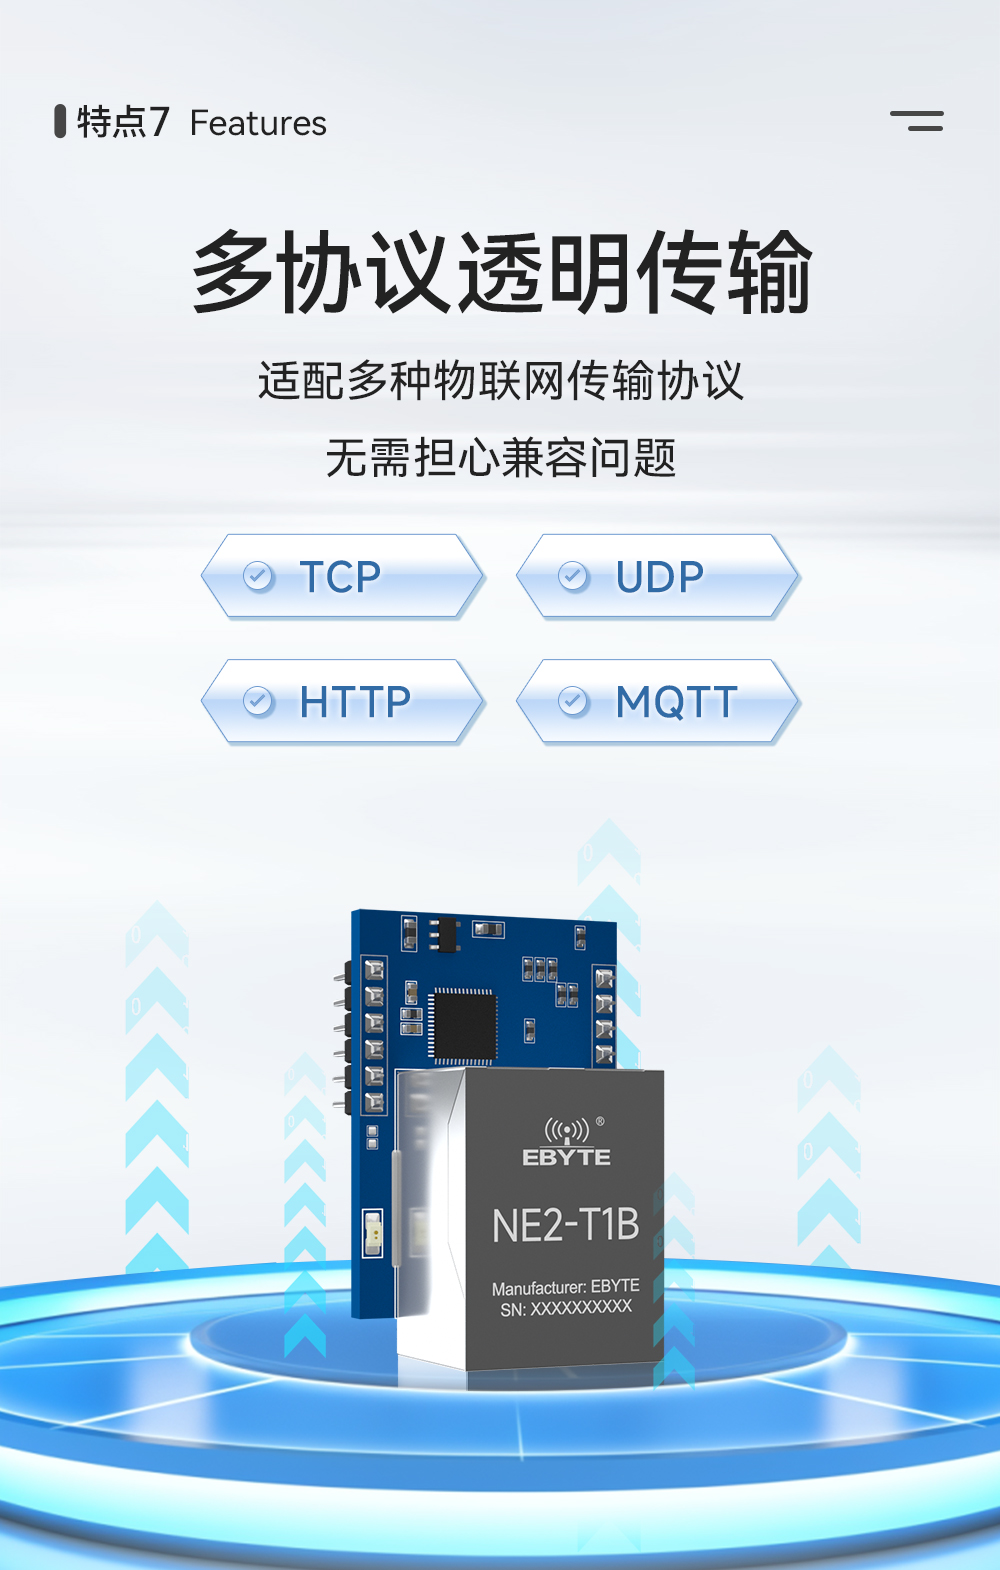 NE2-T1B 以太网转串口模组 (10)